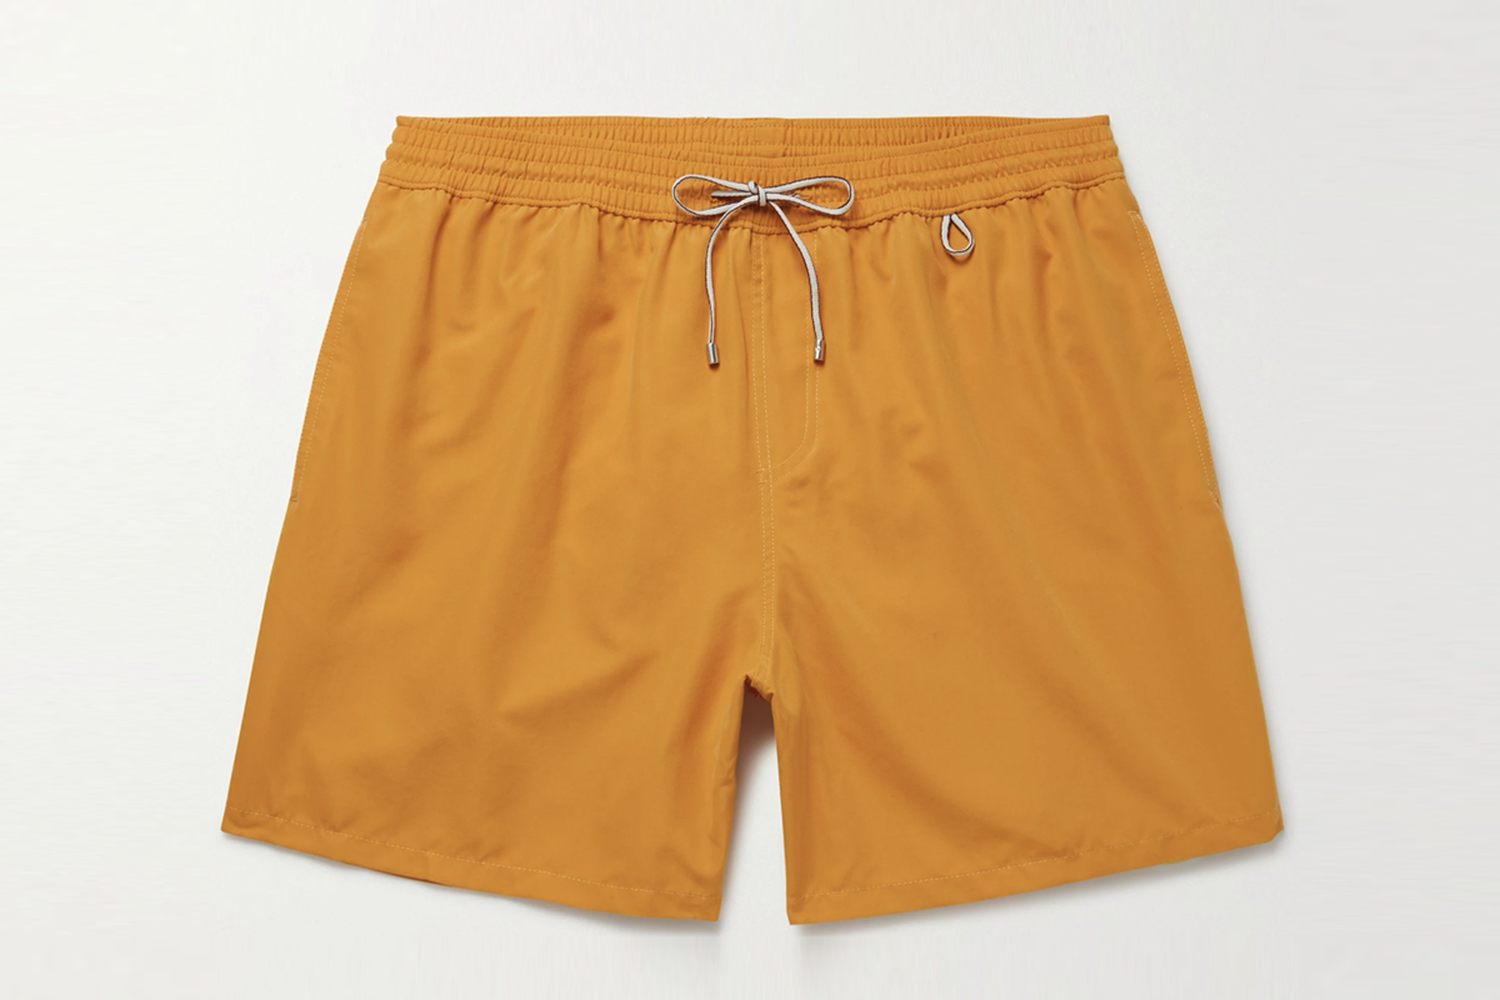 ZWEILI Summer Mens Beach Shorts Vacation Leisure Loose Surfing Beach Shorts Yellow,XX-Large